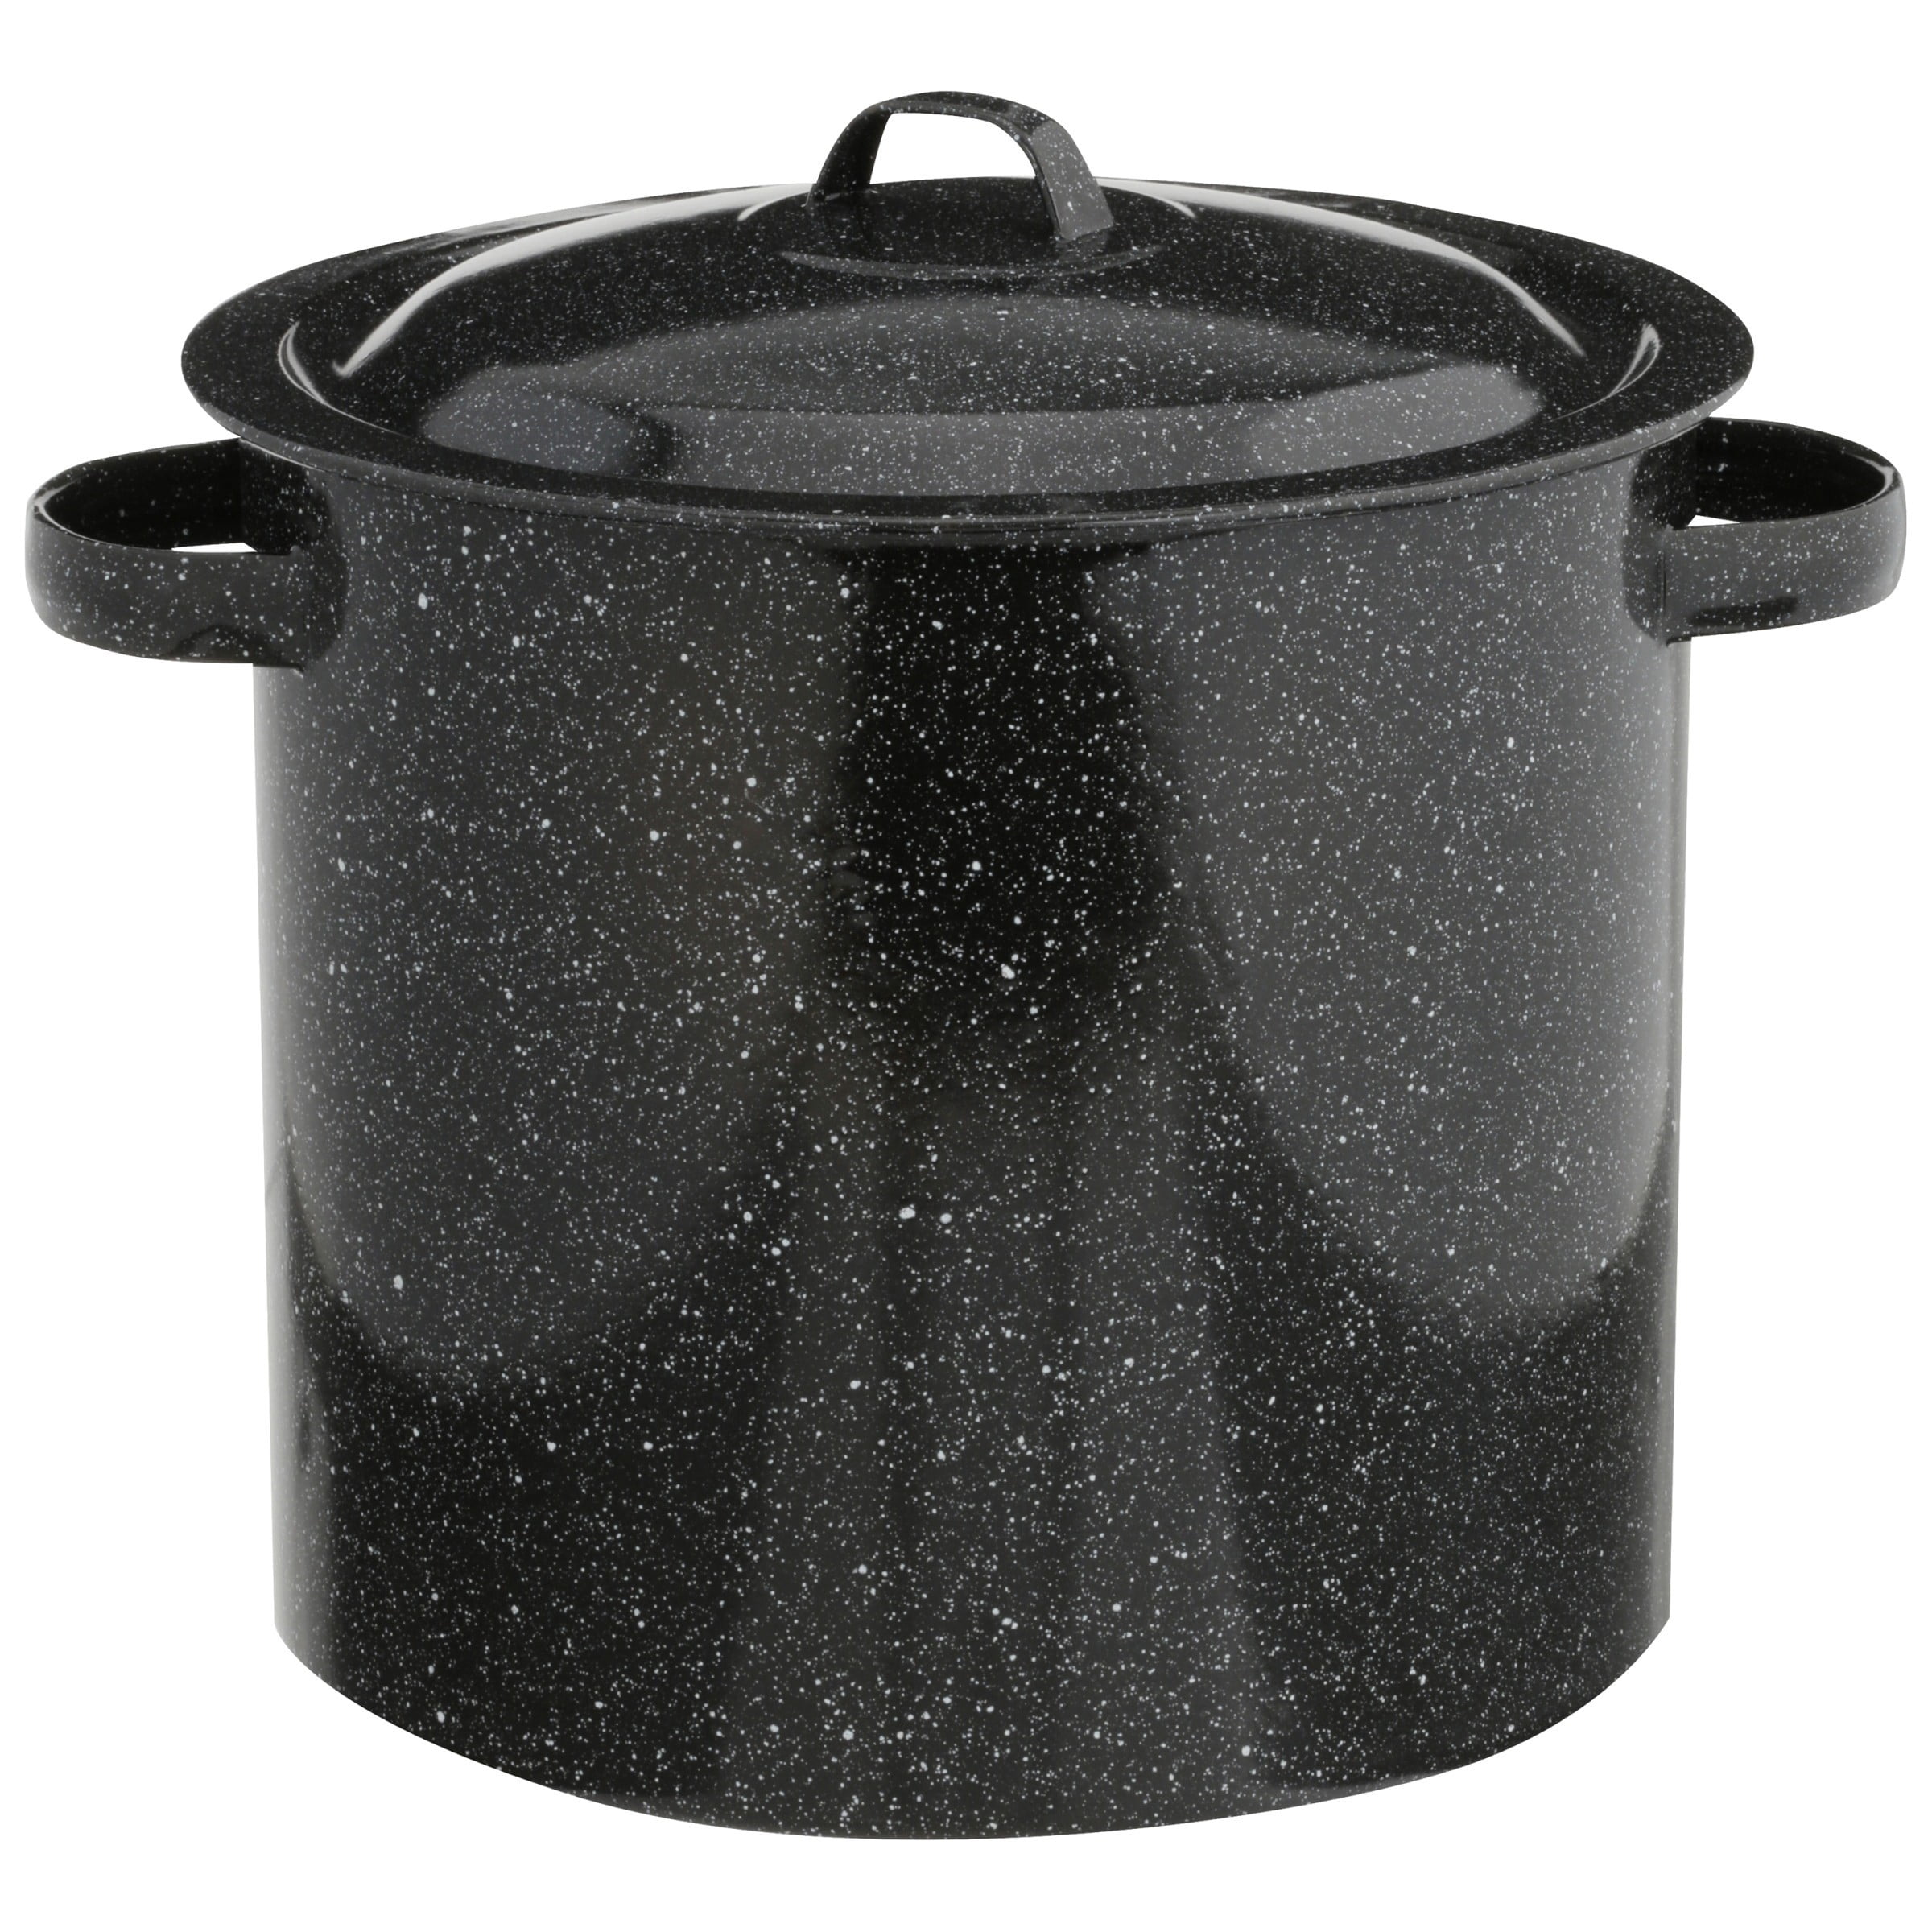 Granite Ware 12-Quart Stock Pot